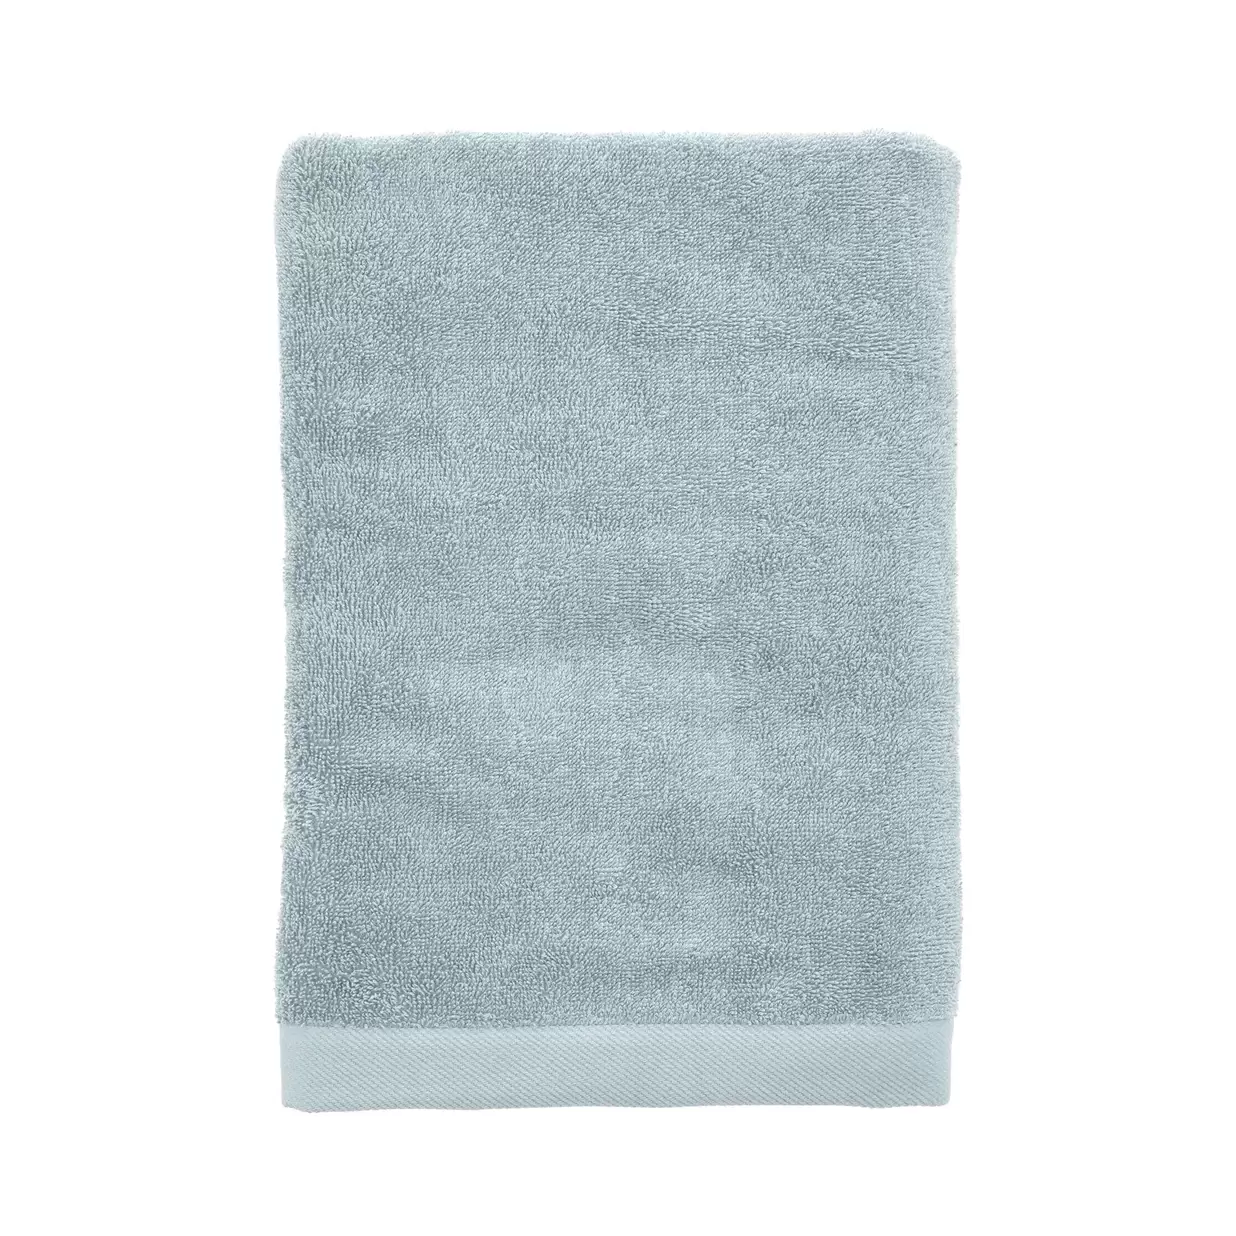 SÖDAHL Comfort håndklæde 70x140 cm linen blue på tilbud til 159,95 kr. hos Sinnerup